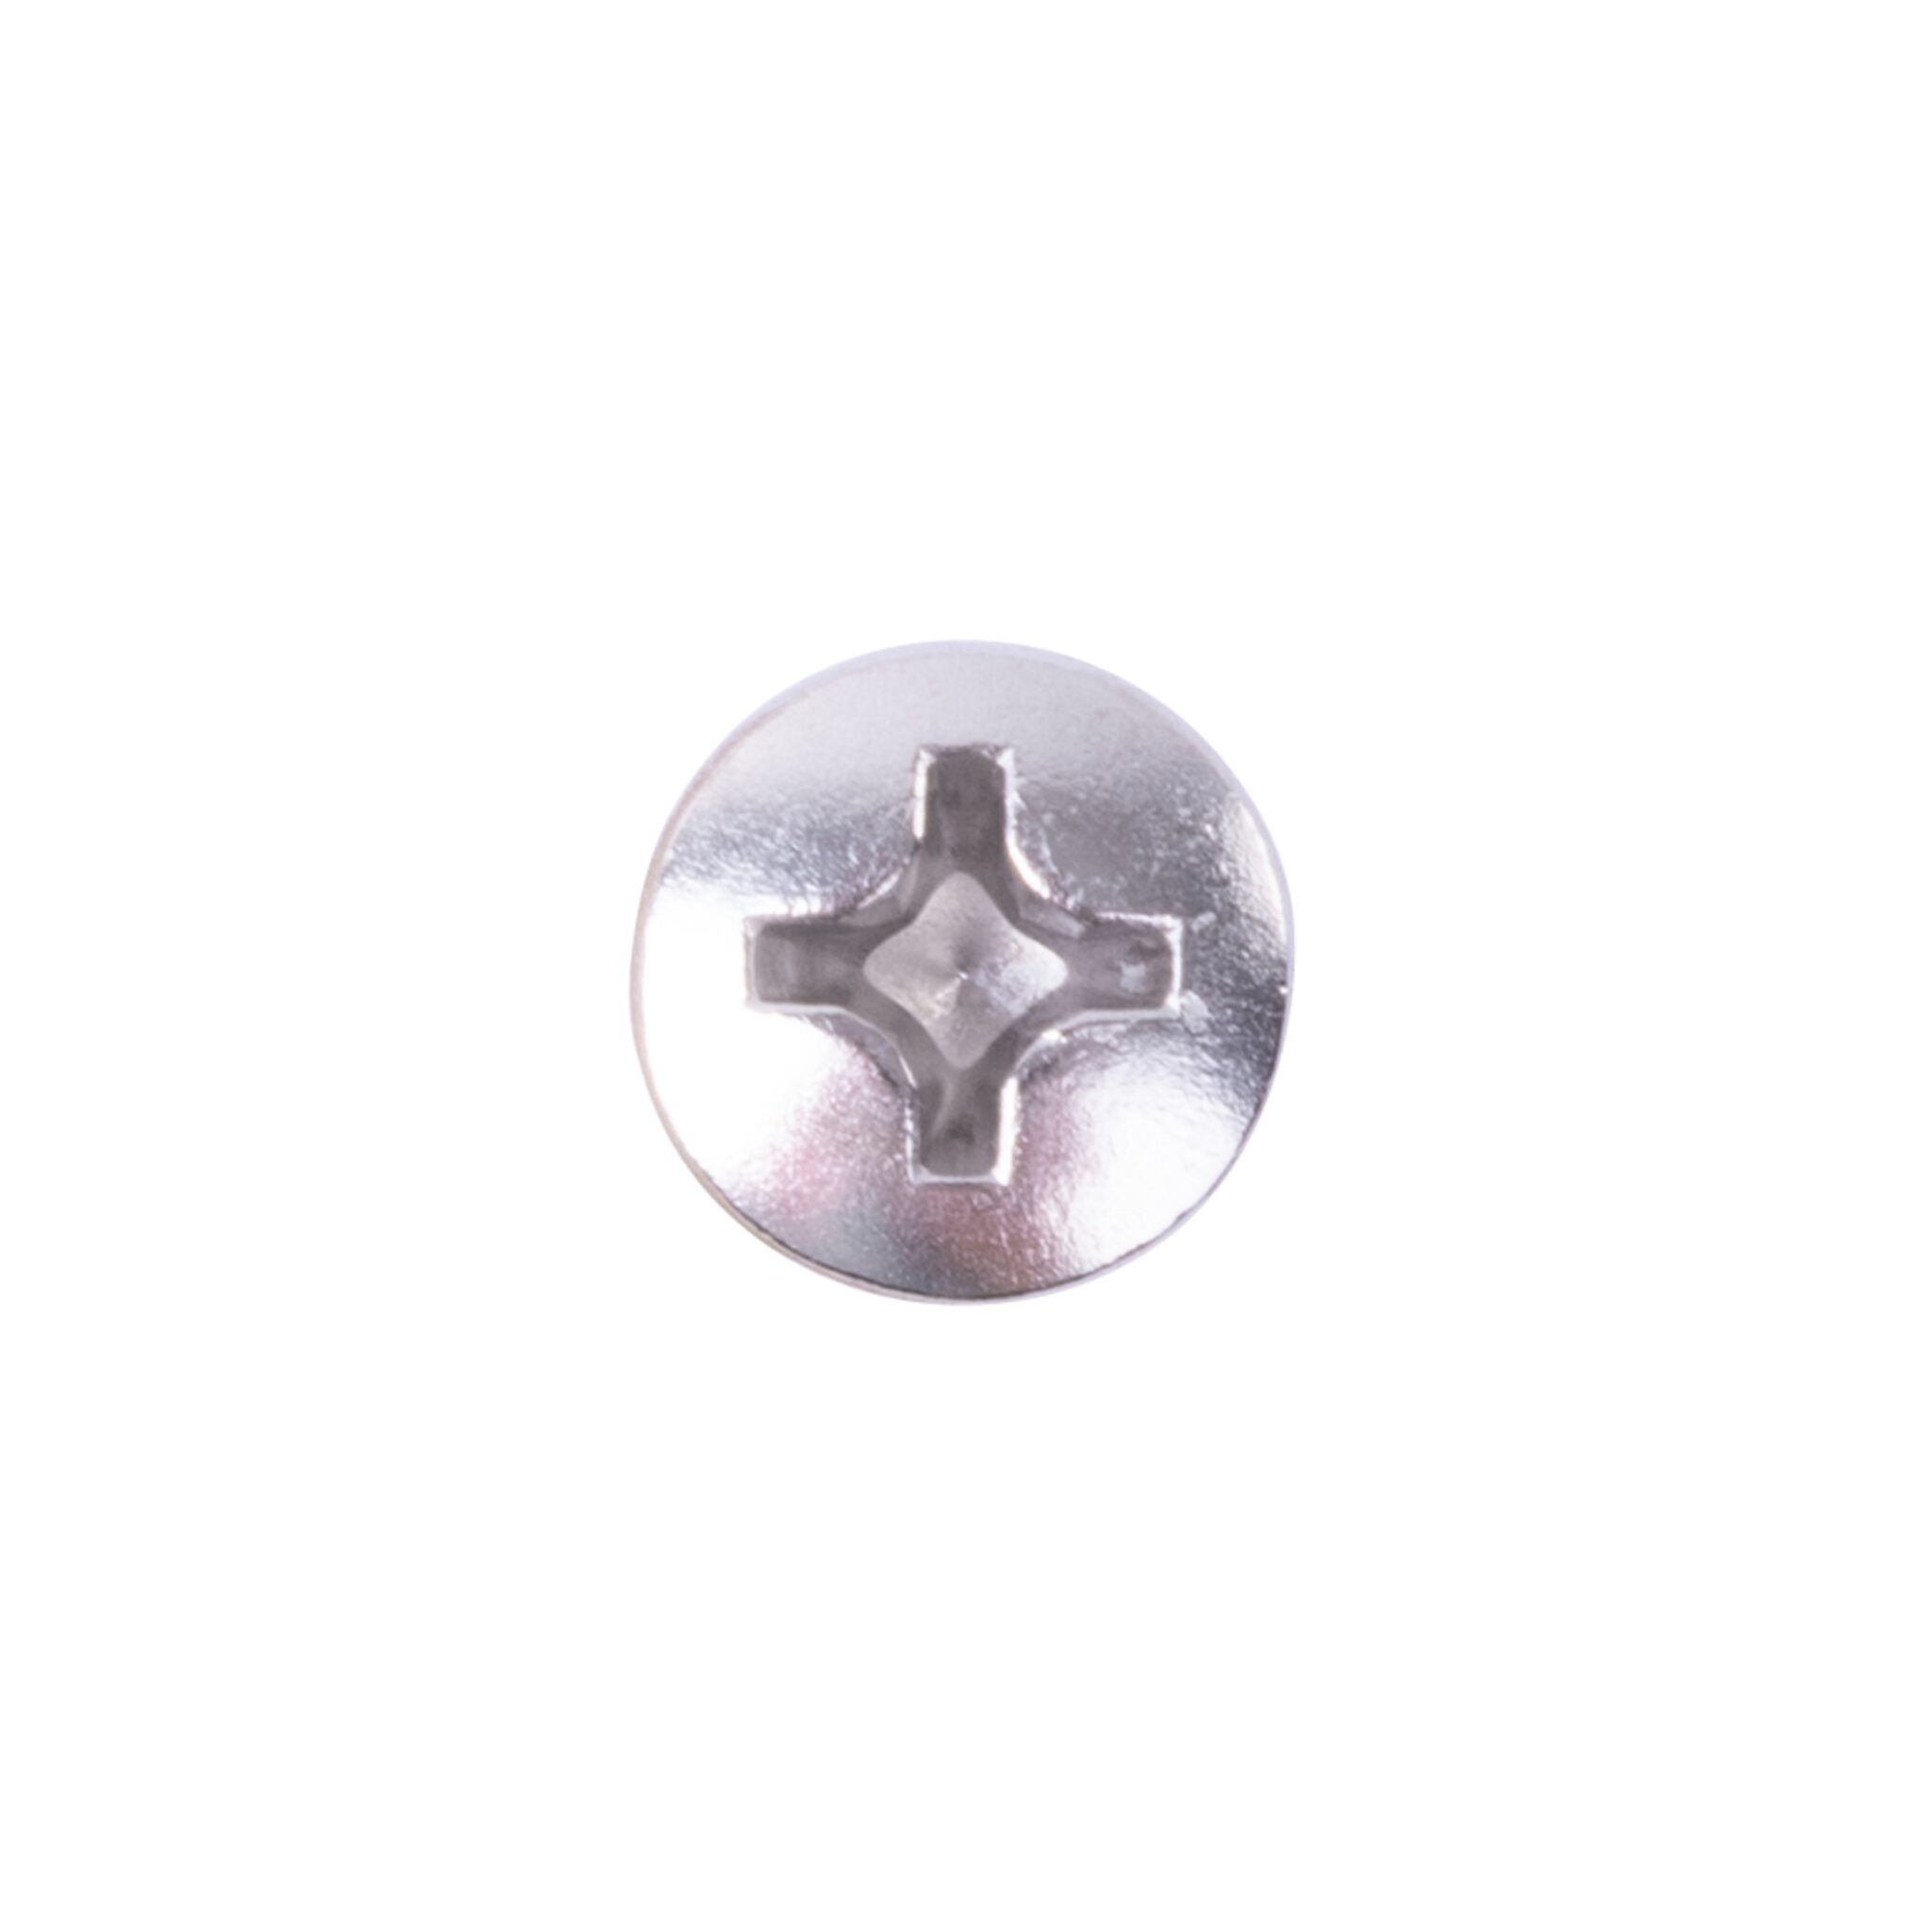 Raised countersunk head sheet metal screw (DIN 7983-A4)